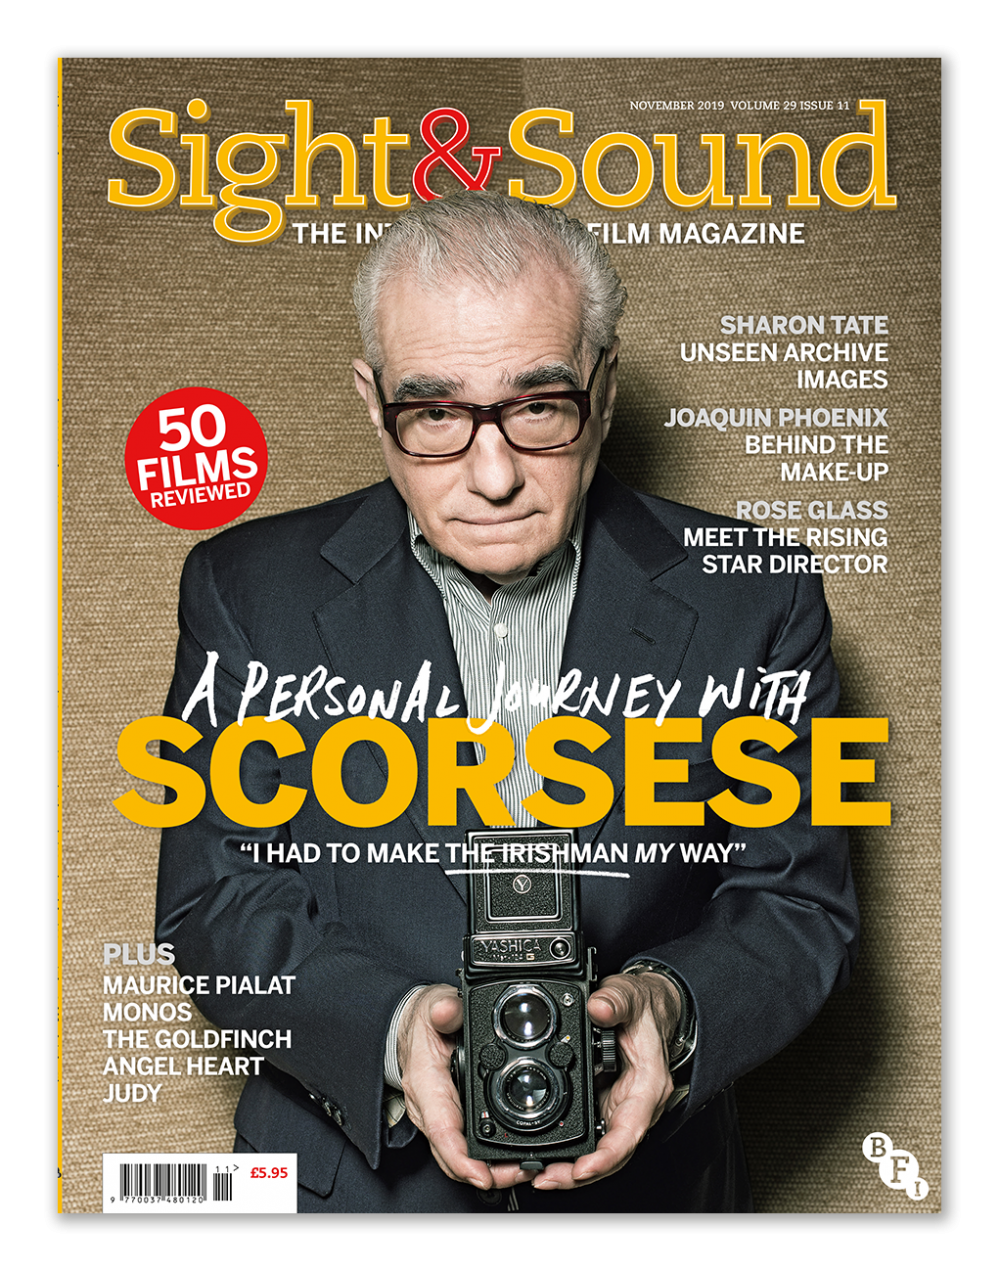 Sight & Sound Volume 29 Issue 11 (November 2019)